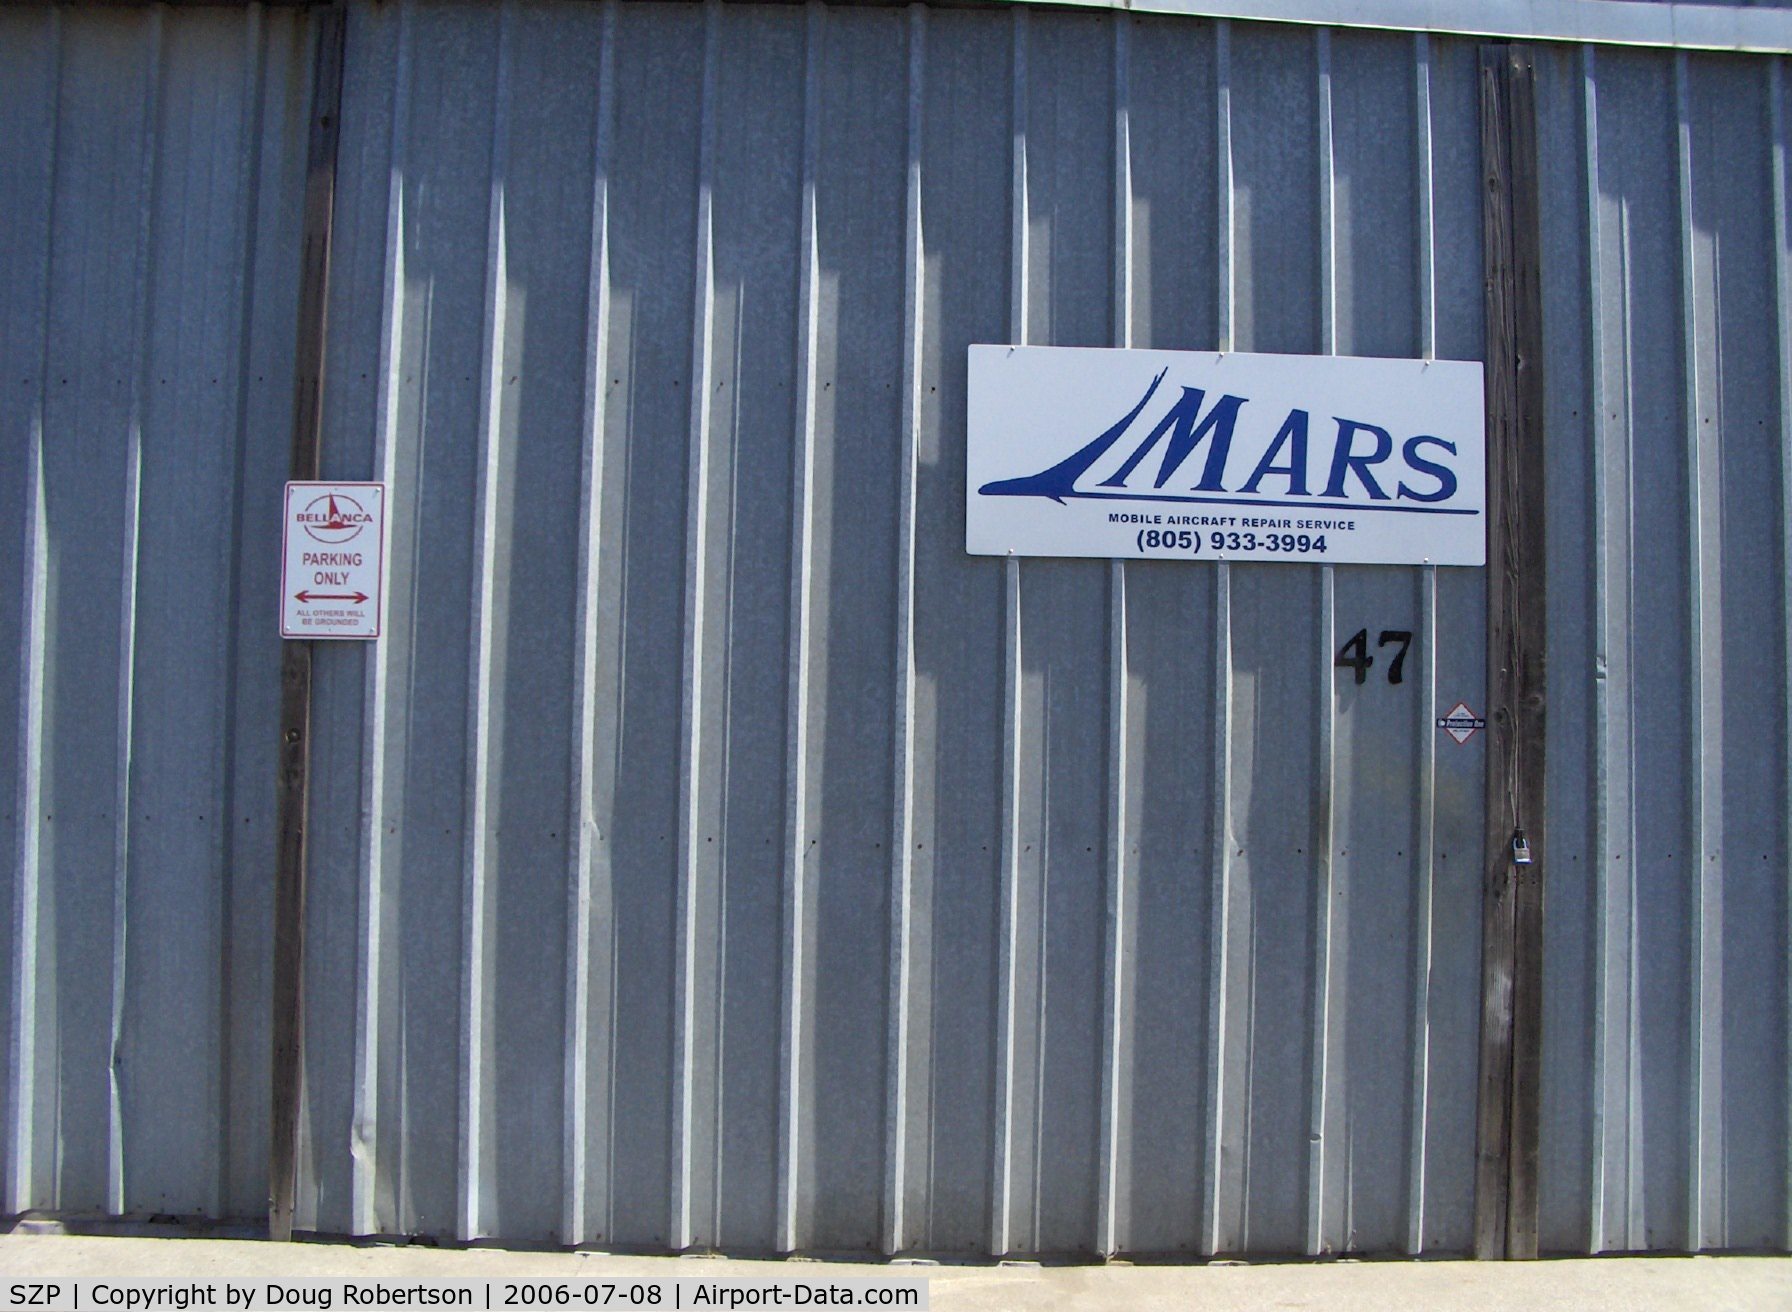 Santa Paula Airport (SZP) - MARS-Mobile Aircraft Repair Service, Dan Torrey, Bellanca specialist